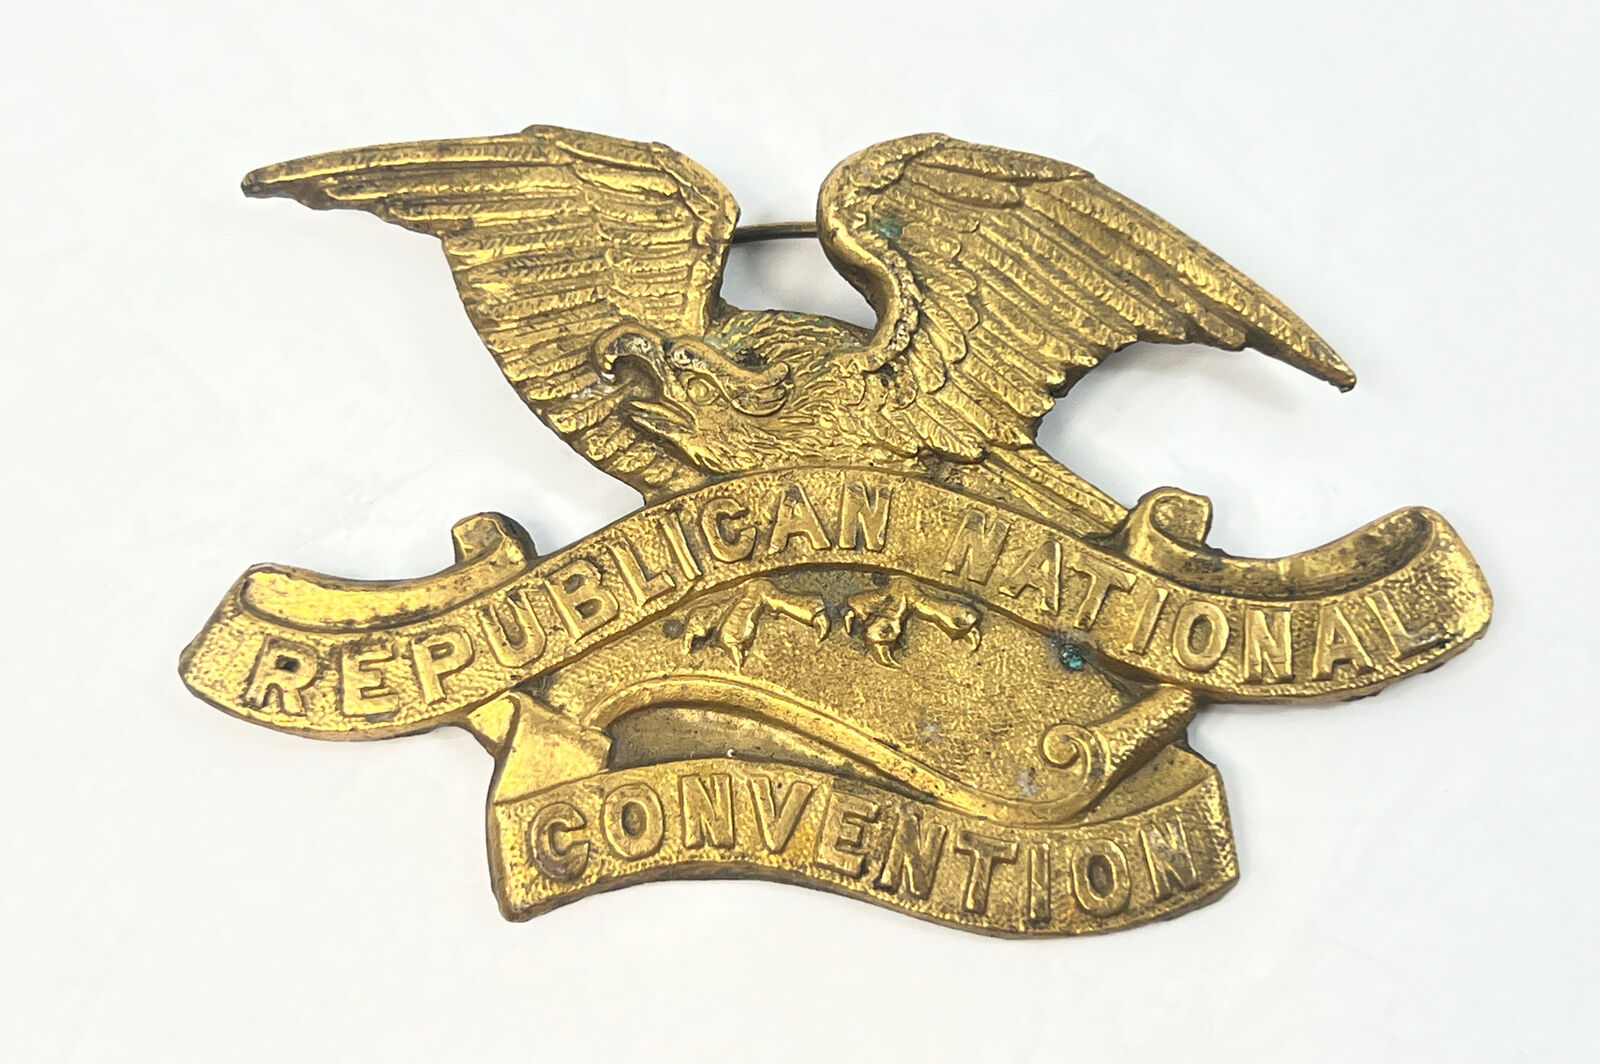 Antique Republican Nation Convention Pin